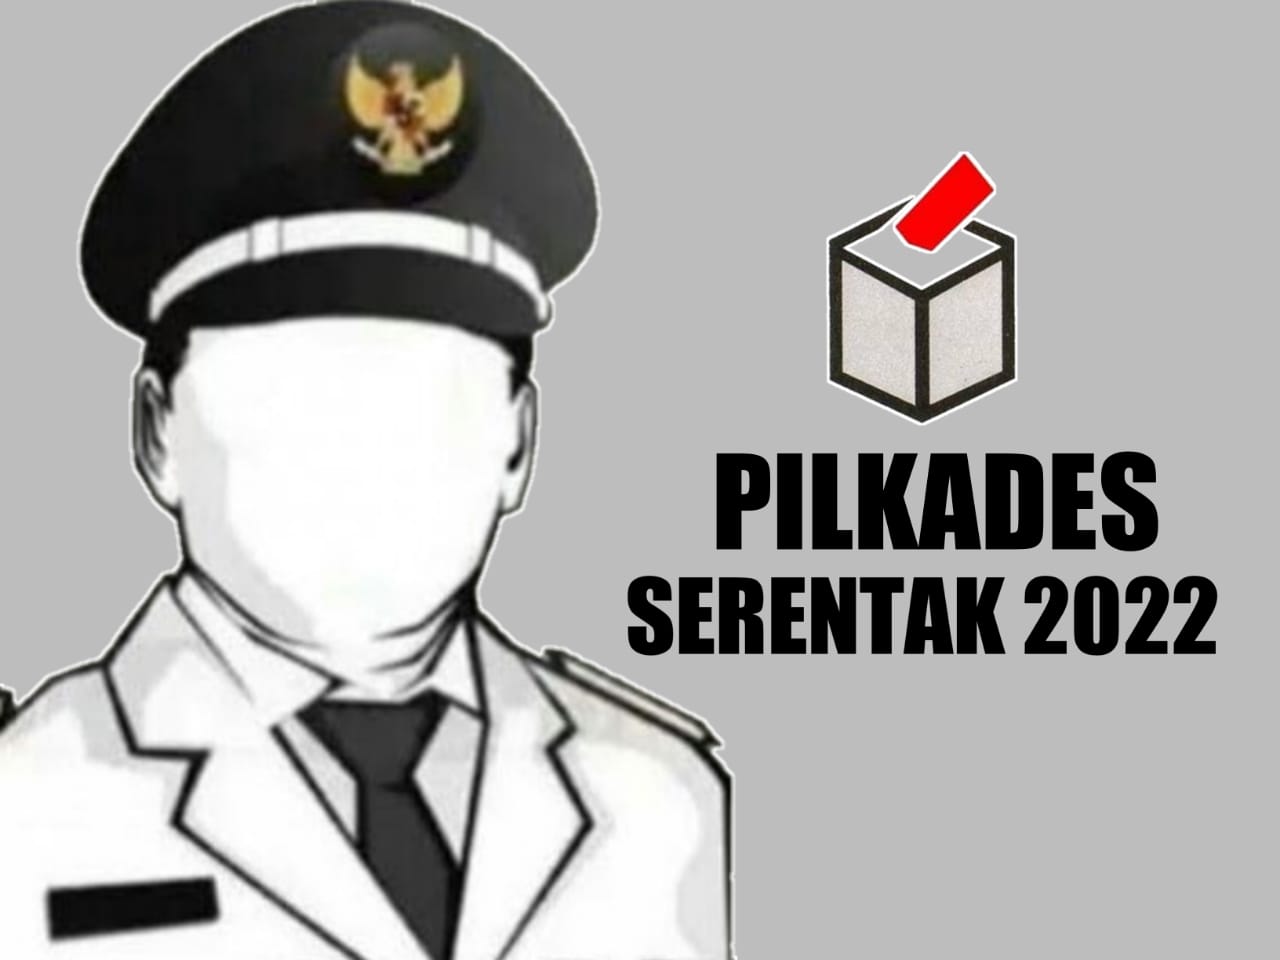 Berikut 53 Nama Calon Kades Yang Berhak Ikut Pilkades Serentak 15 Mei Mendatang Di Belitung, Ada yang Kenal?